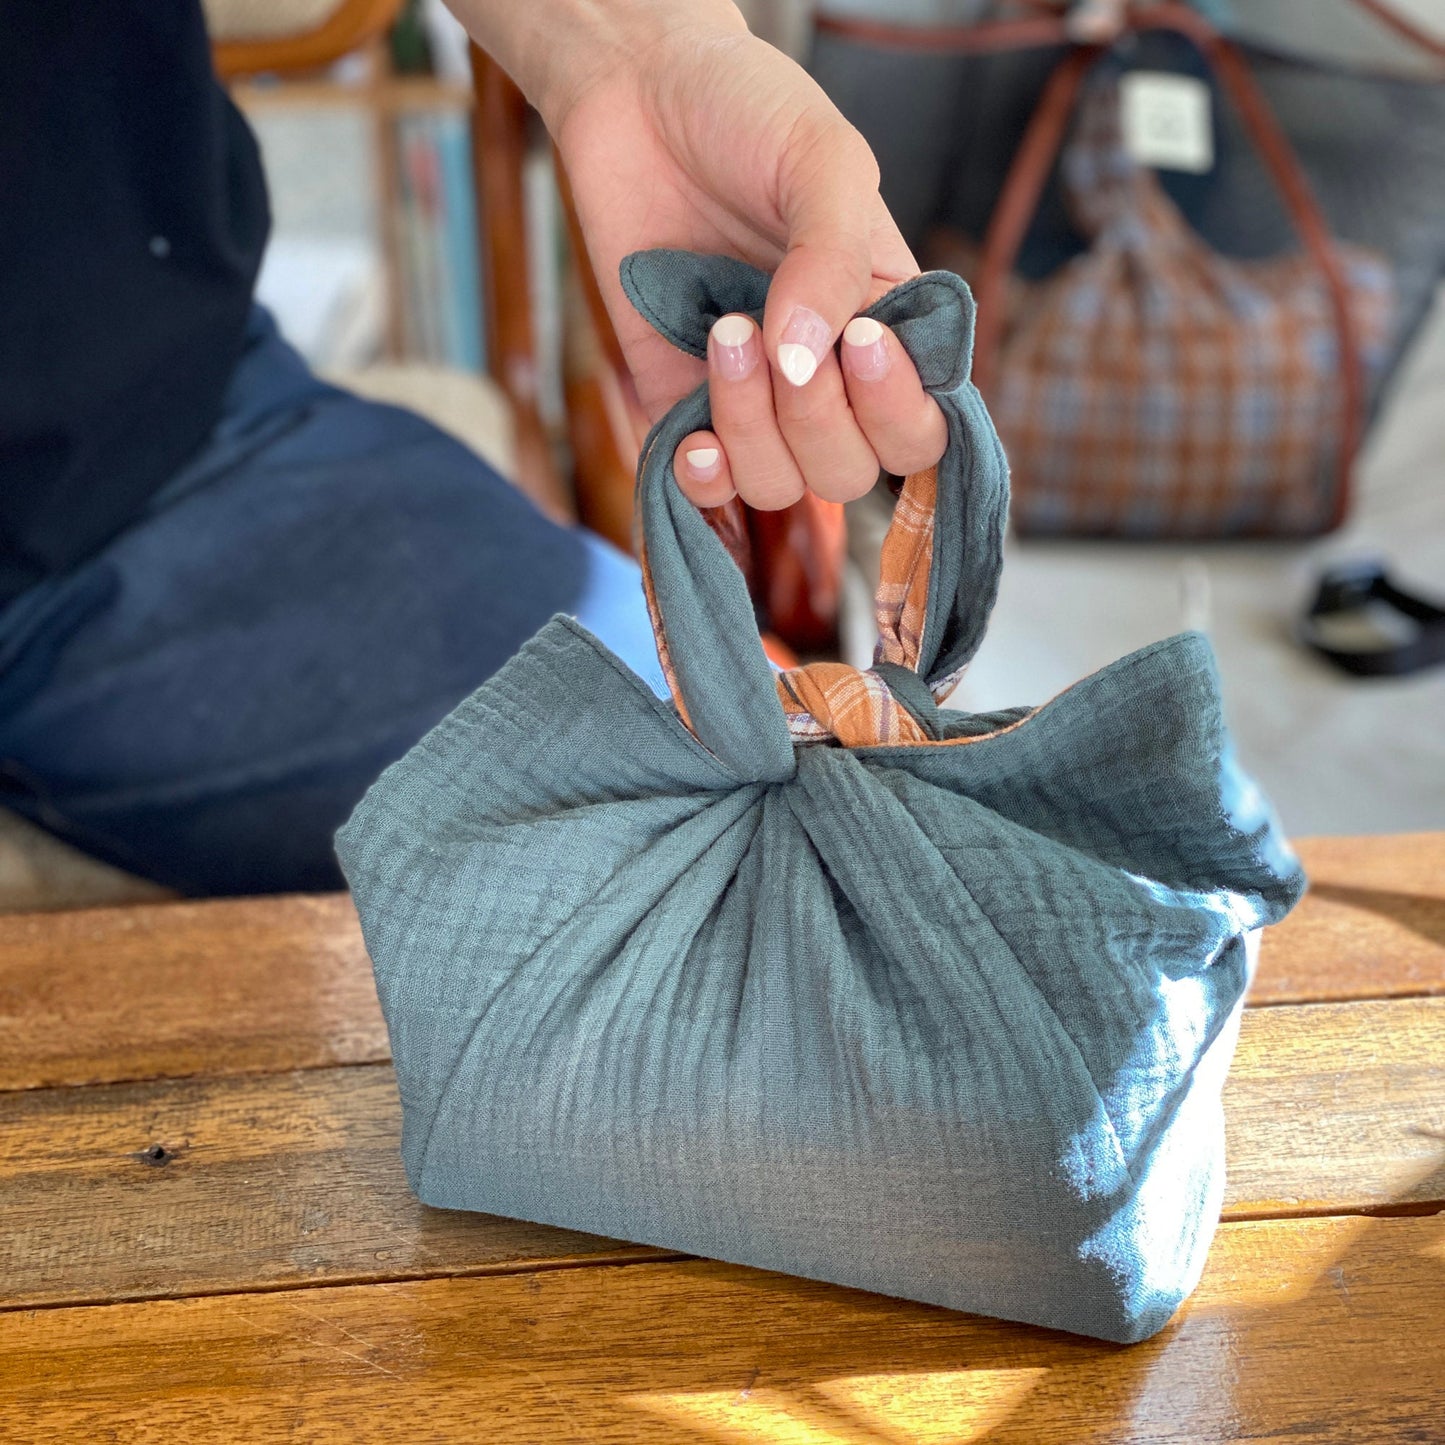 Inner pouch / lunch bag _ Orange green